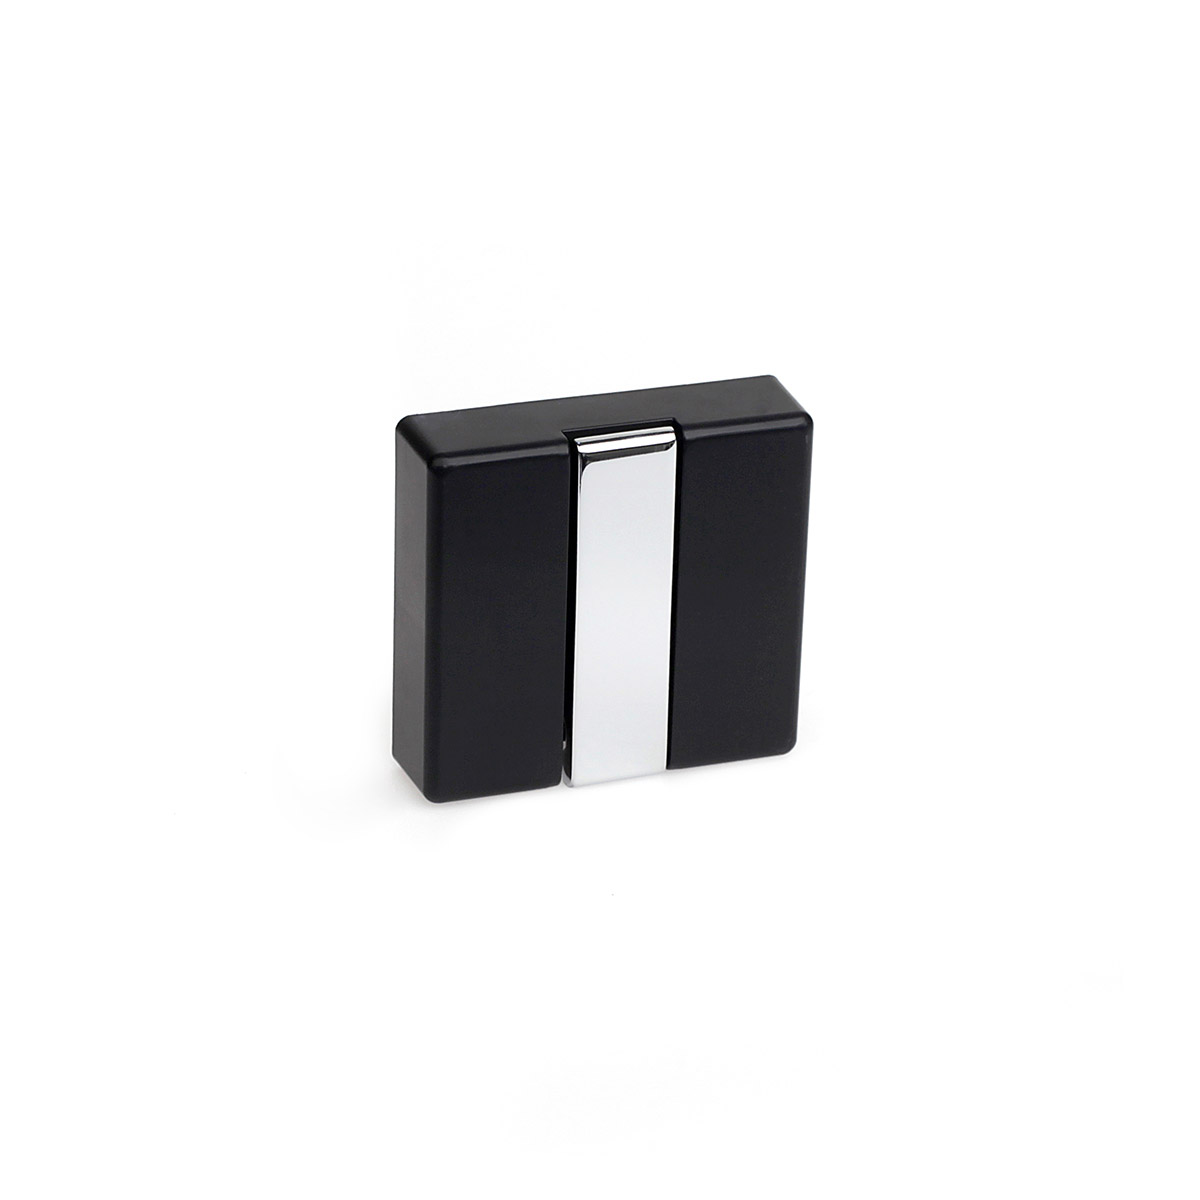 Colgador plegable moderno atornillable con acabado negro. Dimensiones: 74x20x71 mm